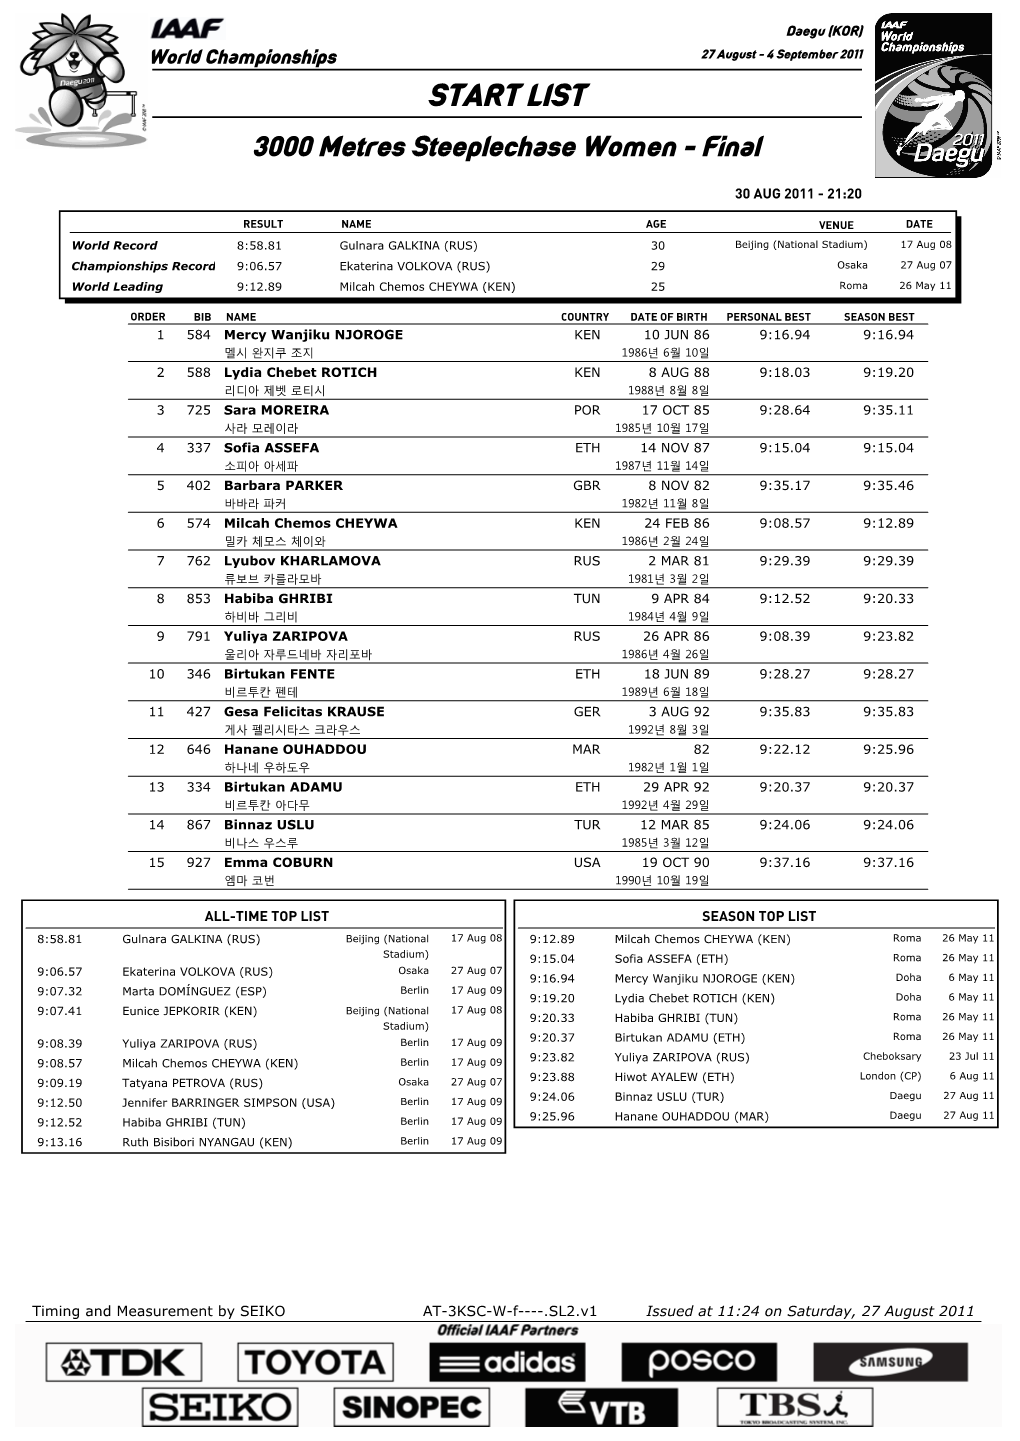 START LIST 3000 Metres Steeplechase Women - Final